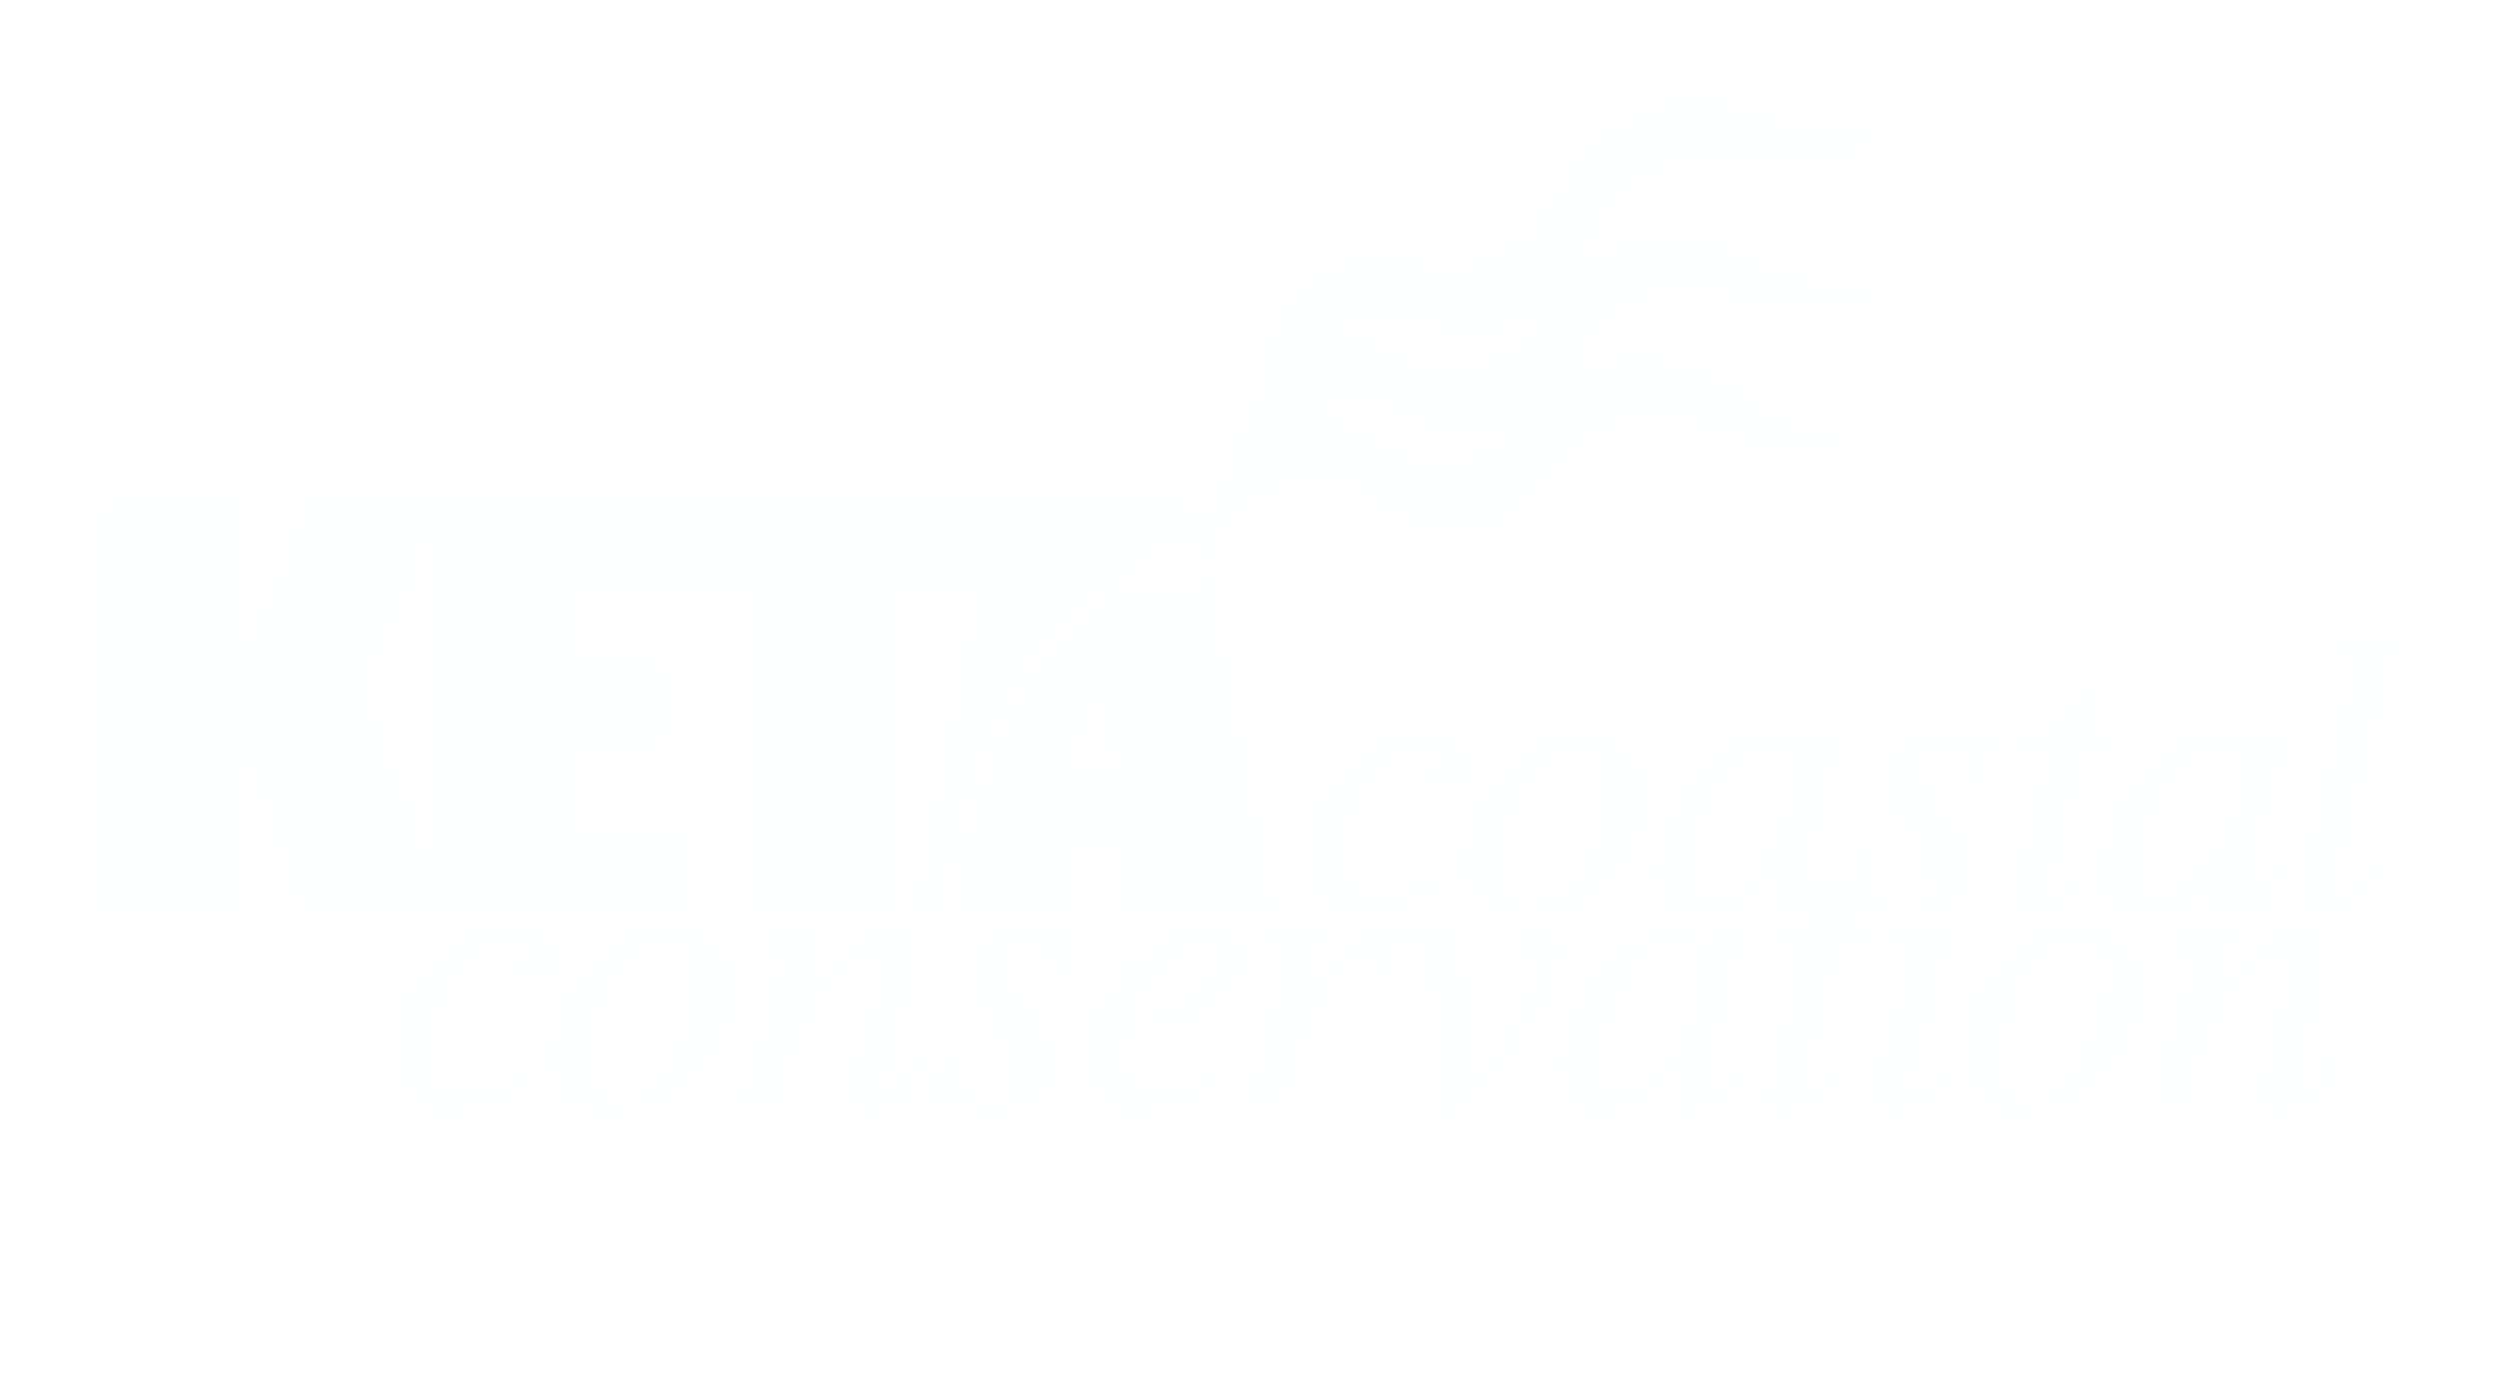 Keta Coastal Conservation